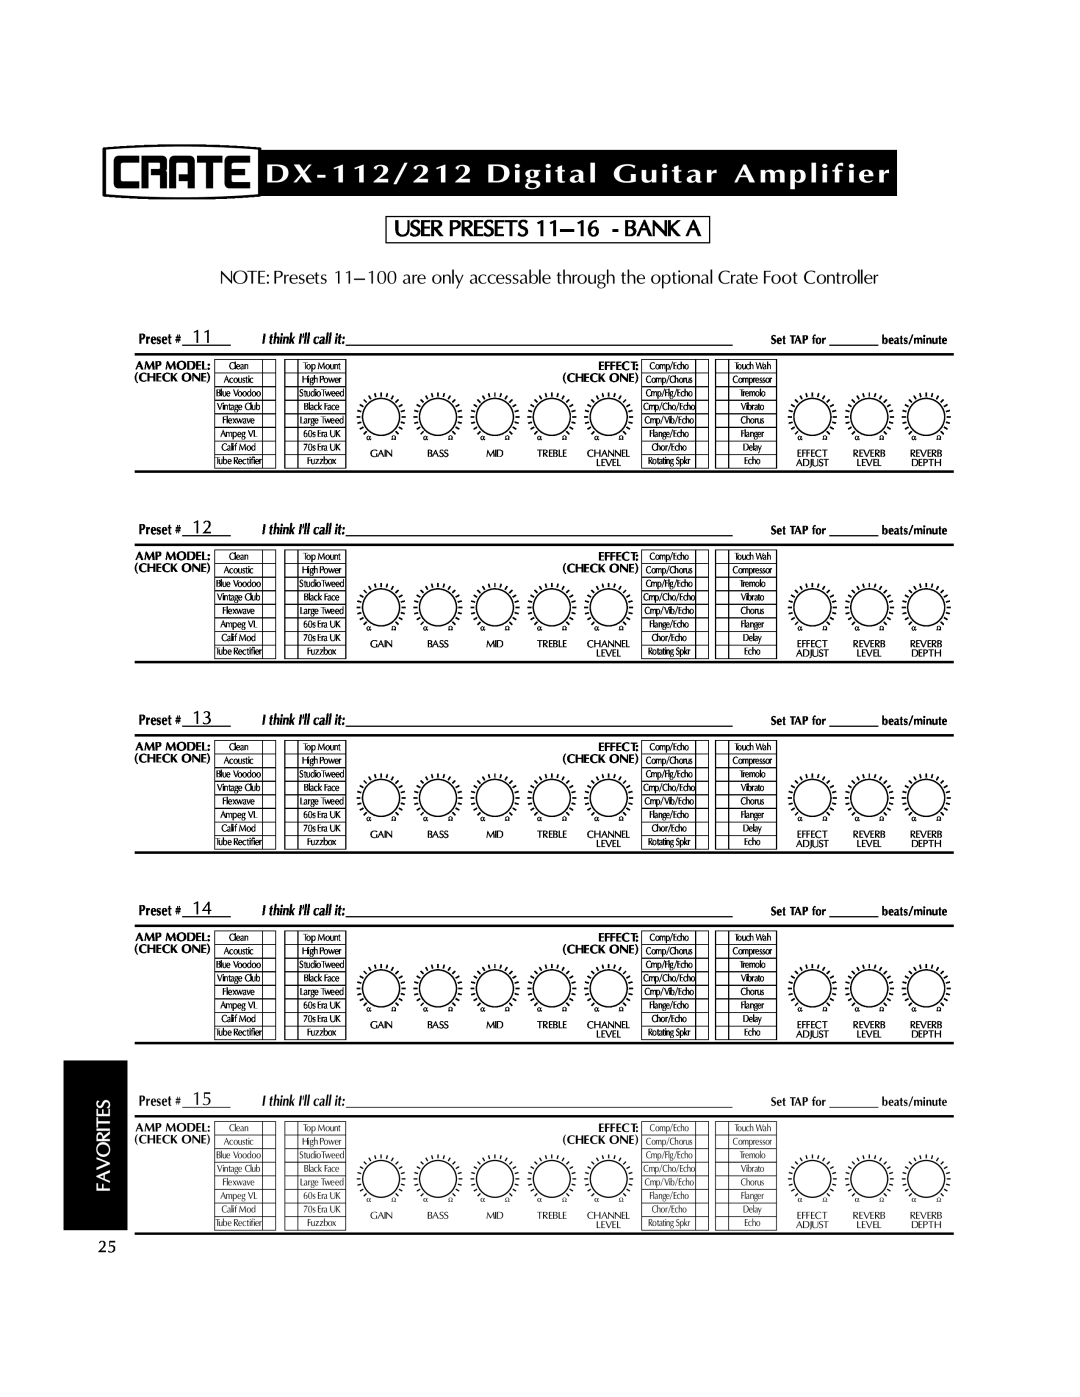 Crate Amplifiers DX-212 manual USER PRESETS 11-16- BANK A, DX-112/212Digital Guitar Amplifier, Favorites, Preset # 